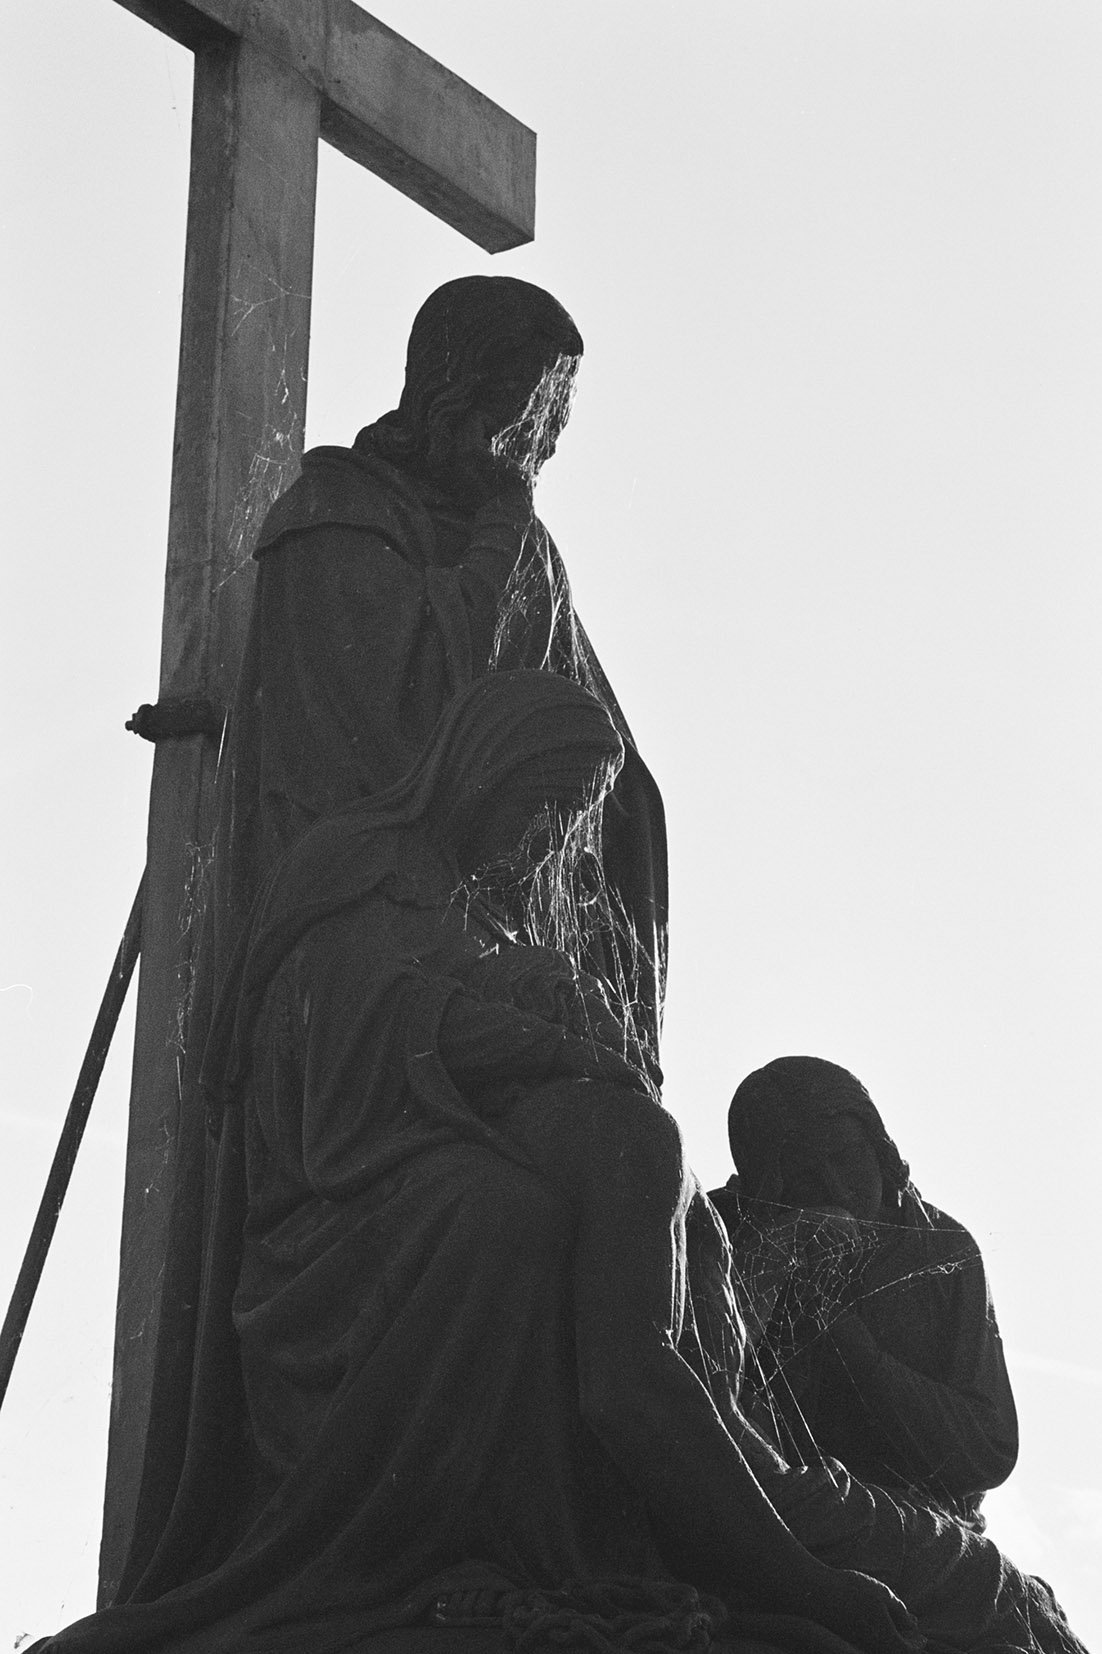  ‘The Pieta’ – Crucifixion sculpture on the Charles Bridge, Prague, Czech Republic/ 2003 